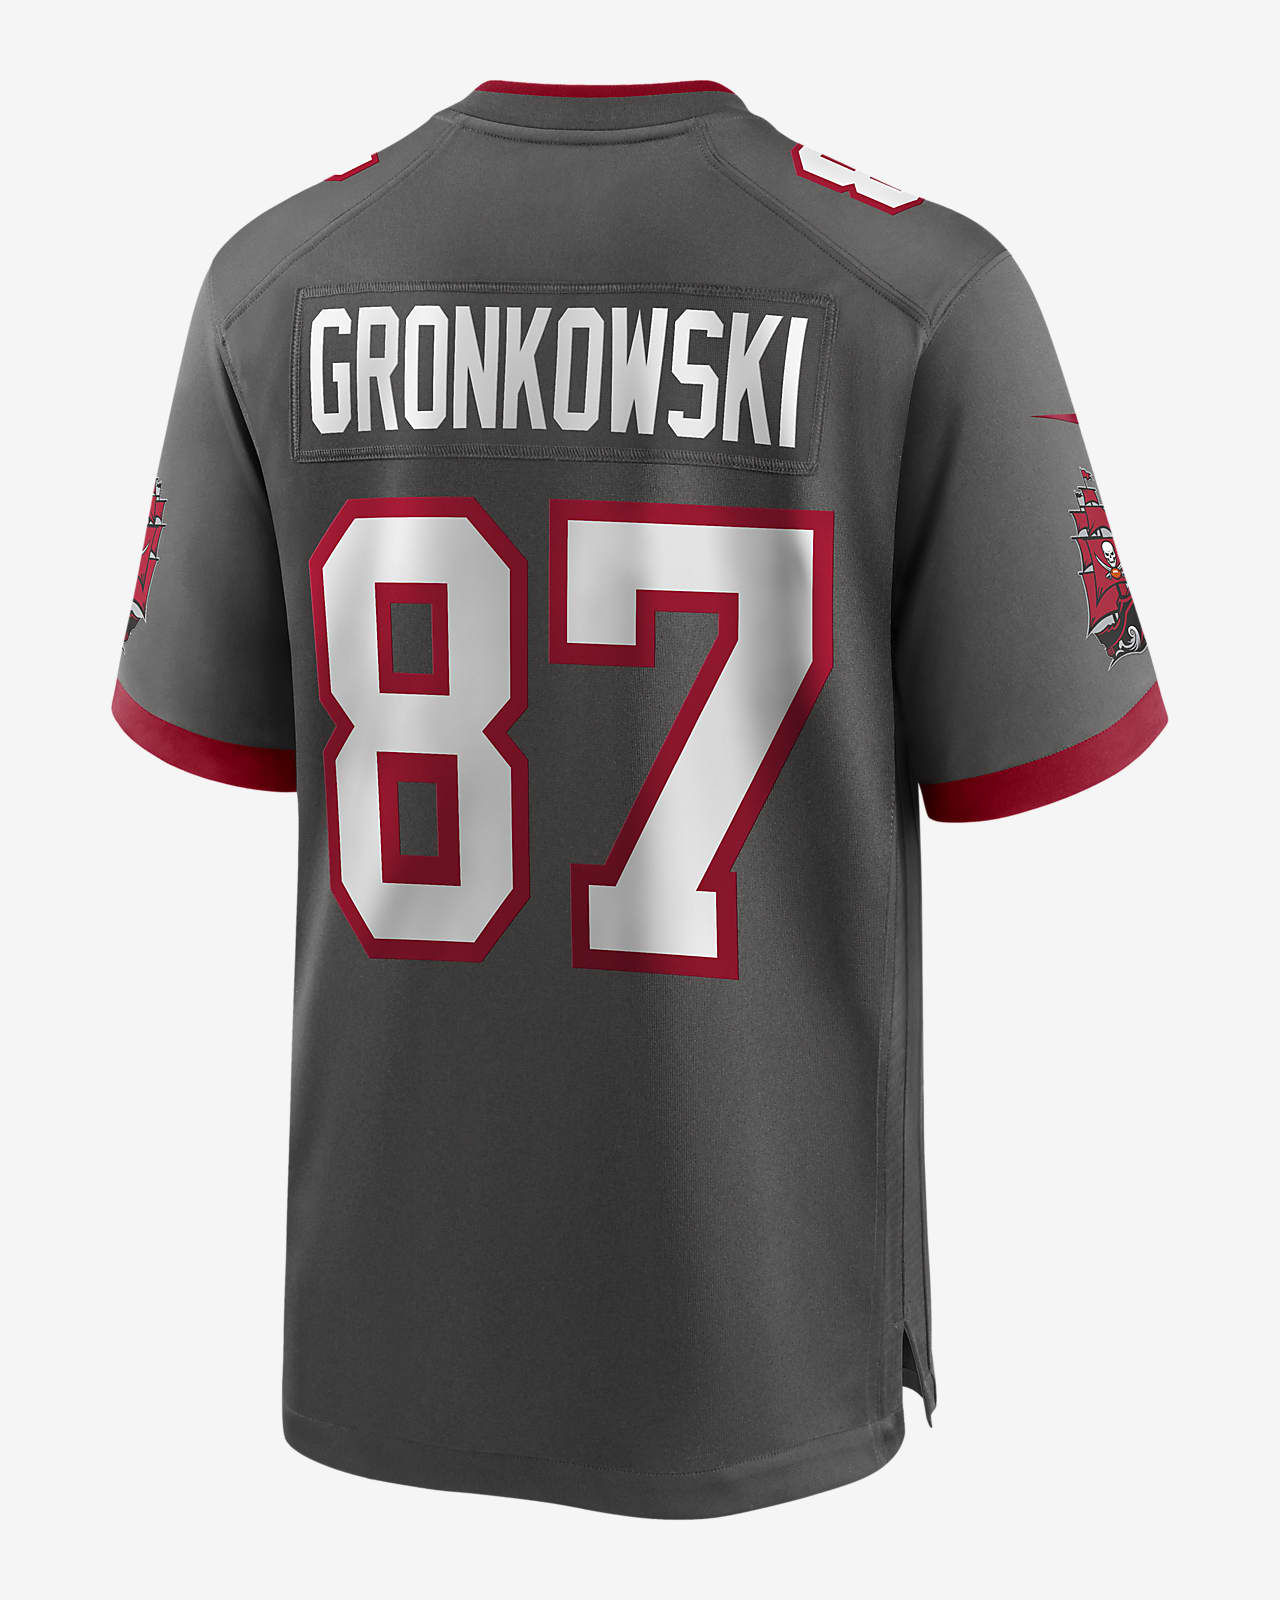 especificar Odia liebre NFL Tampa Bay Buccaneers (Rob Gronkowski) Men's Game Jersey. Nike.com